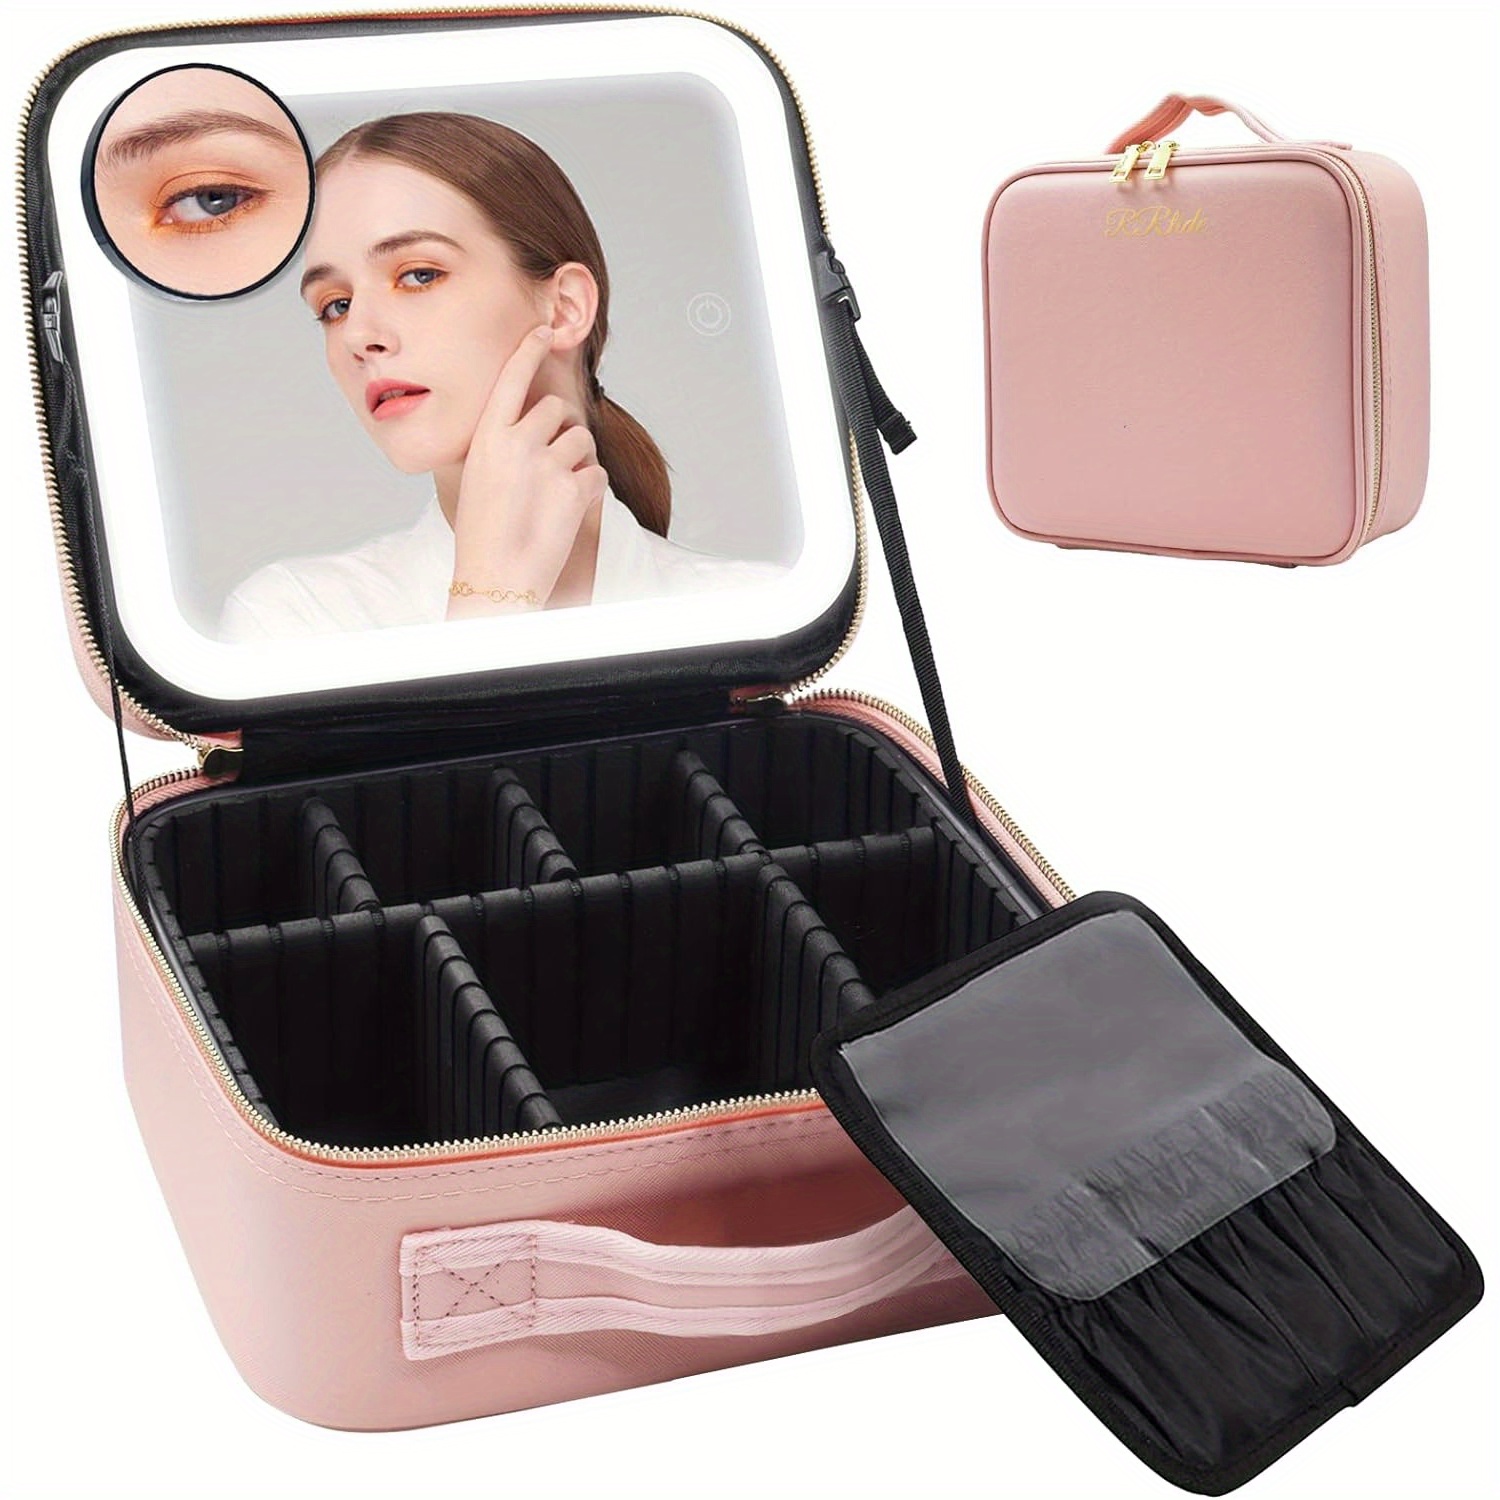 

Travel Makeup Bag Cosmetic Bag Makeup Organizer Bag With Lighted Mirror 3 Color Scenarios Adjustable Brightness, Detachable Waterproof Makeup Train Case, Gift For Women